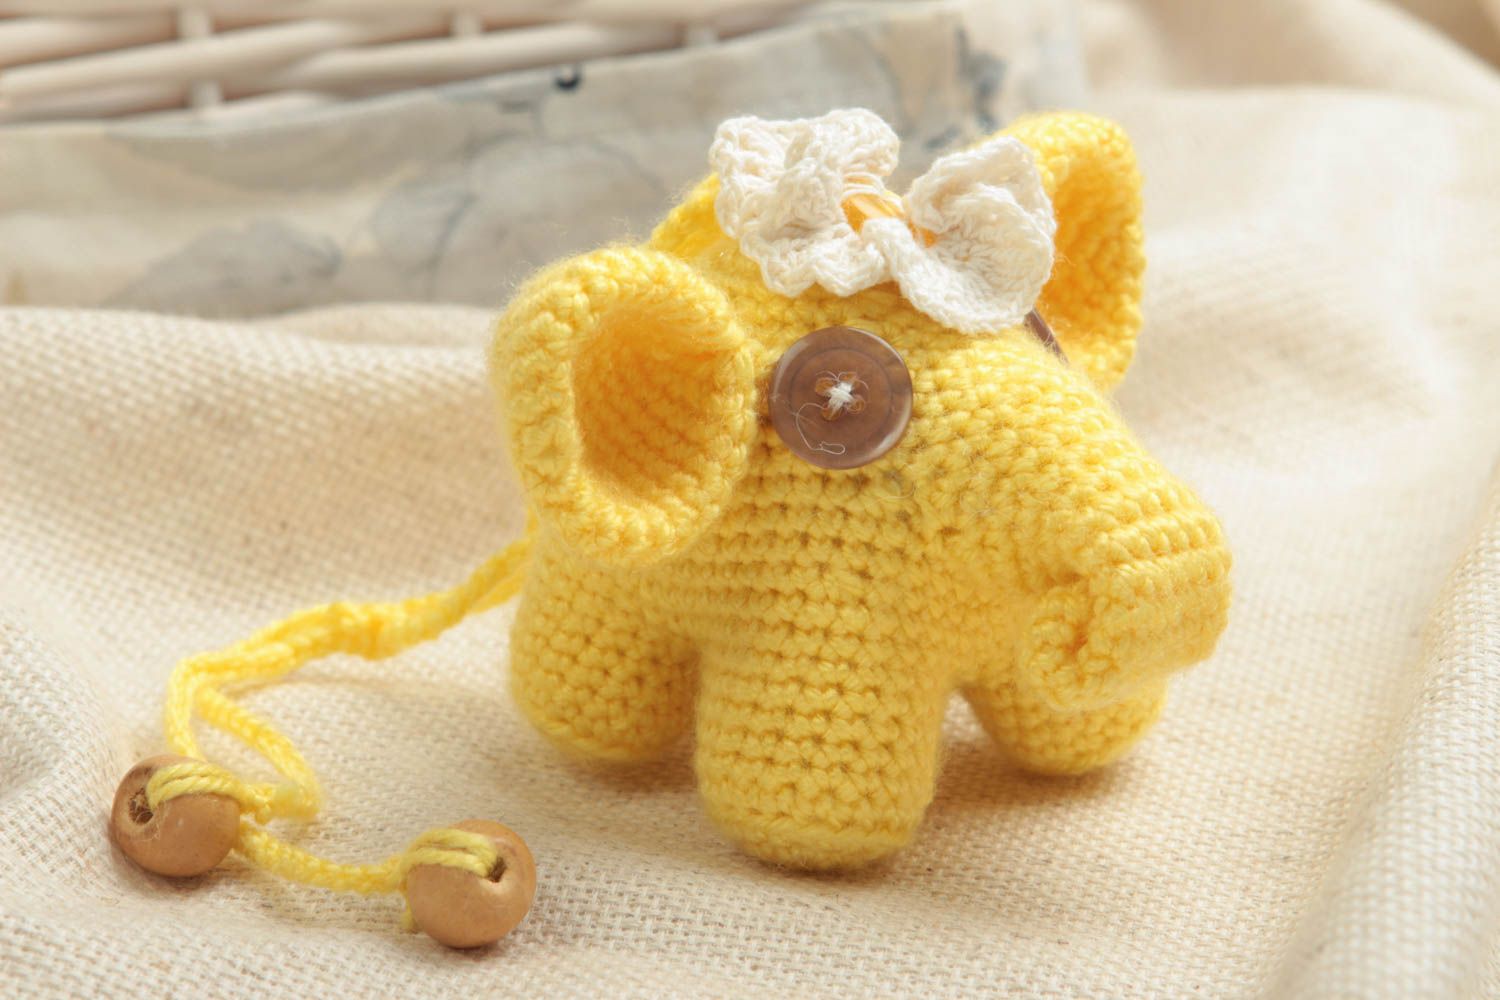 Beautiful handmade crochet toy childrens stuffed soft toy home design gift ideas photo 1